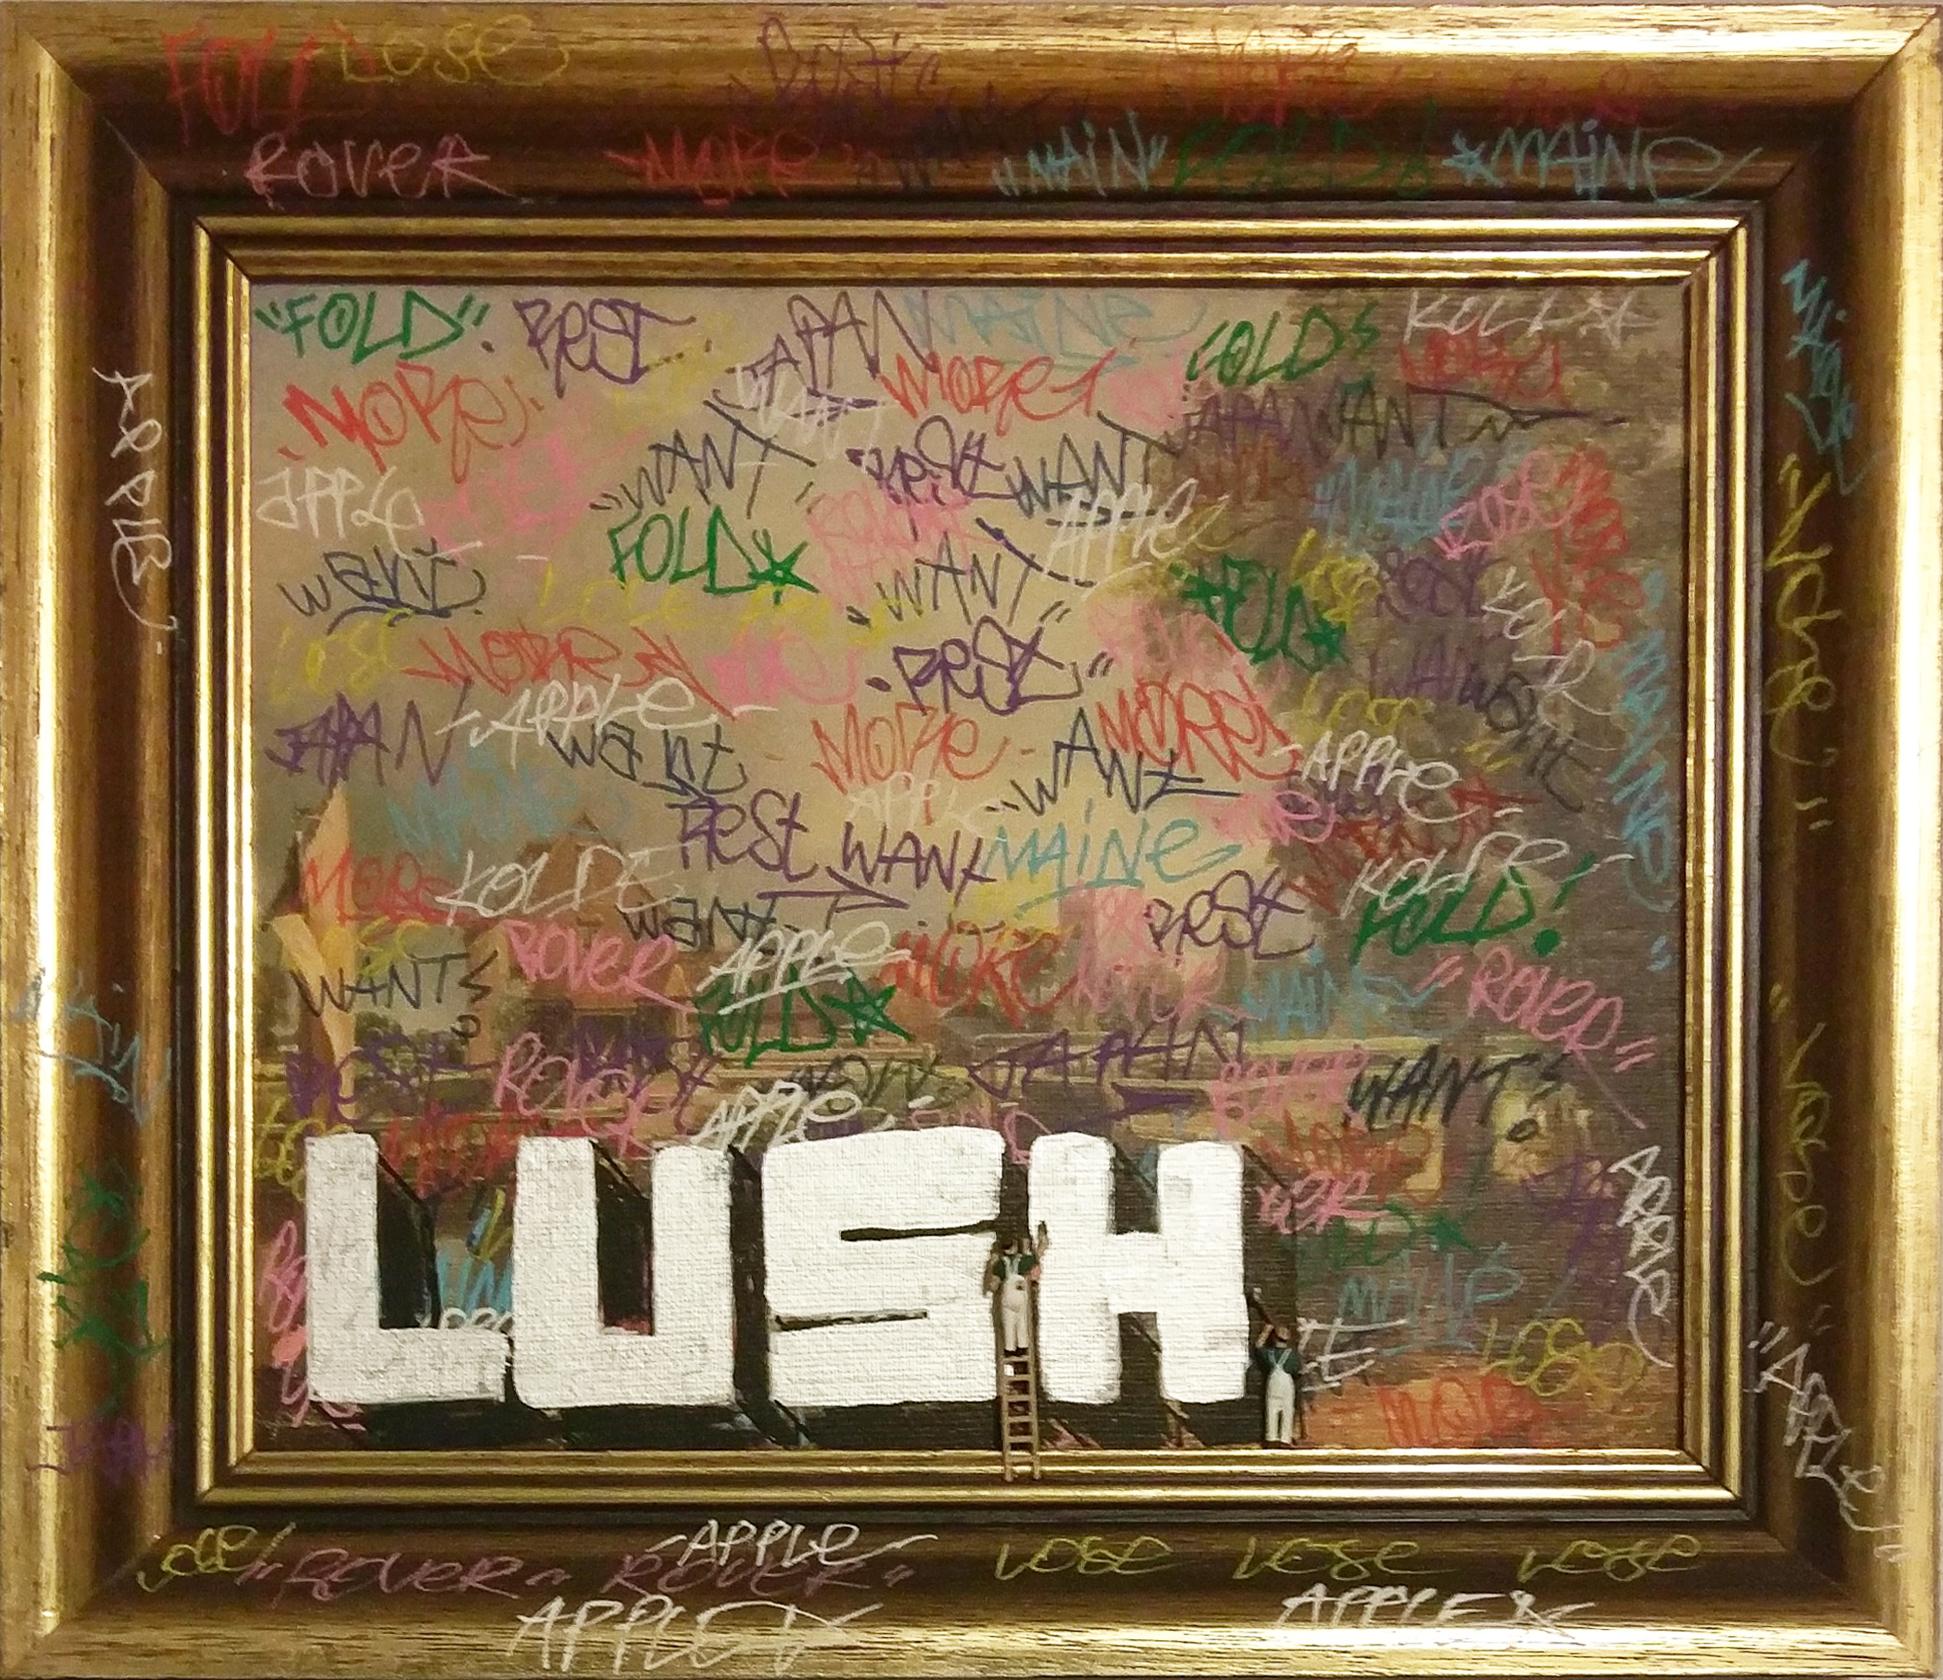 Lush - Rollers, Original Work by Lush, Australian Street Artist For Sale at  1stDibs